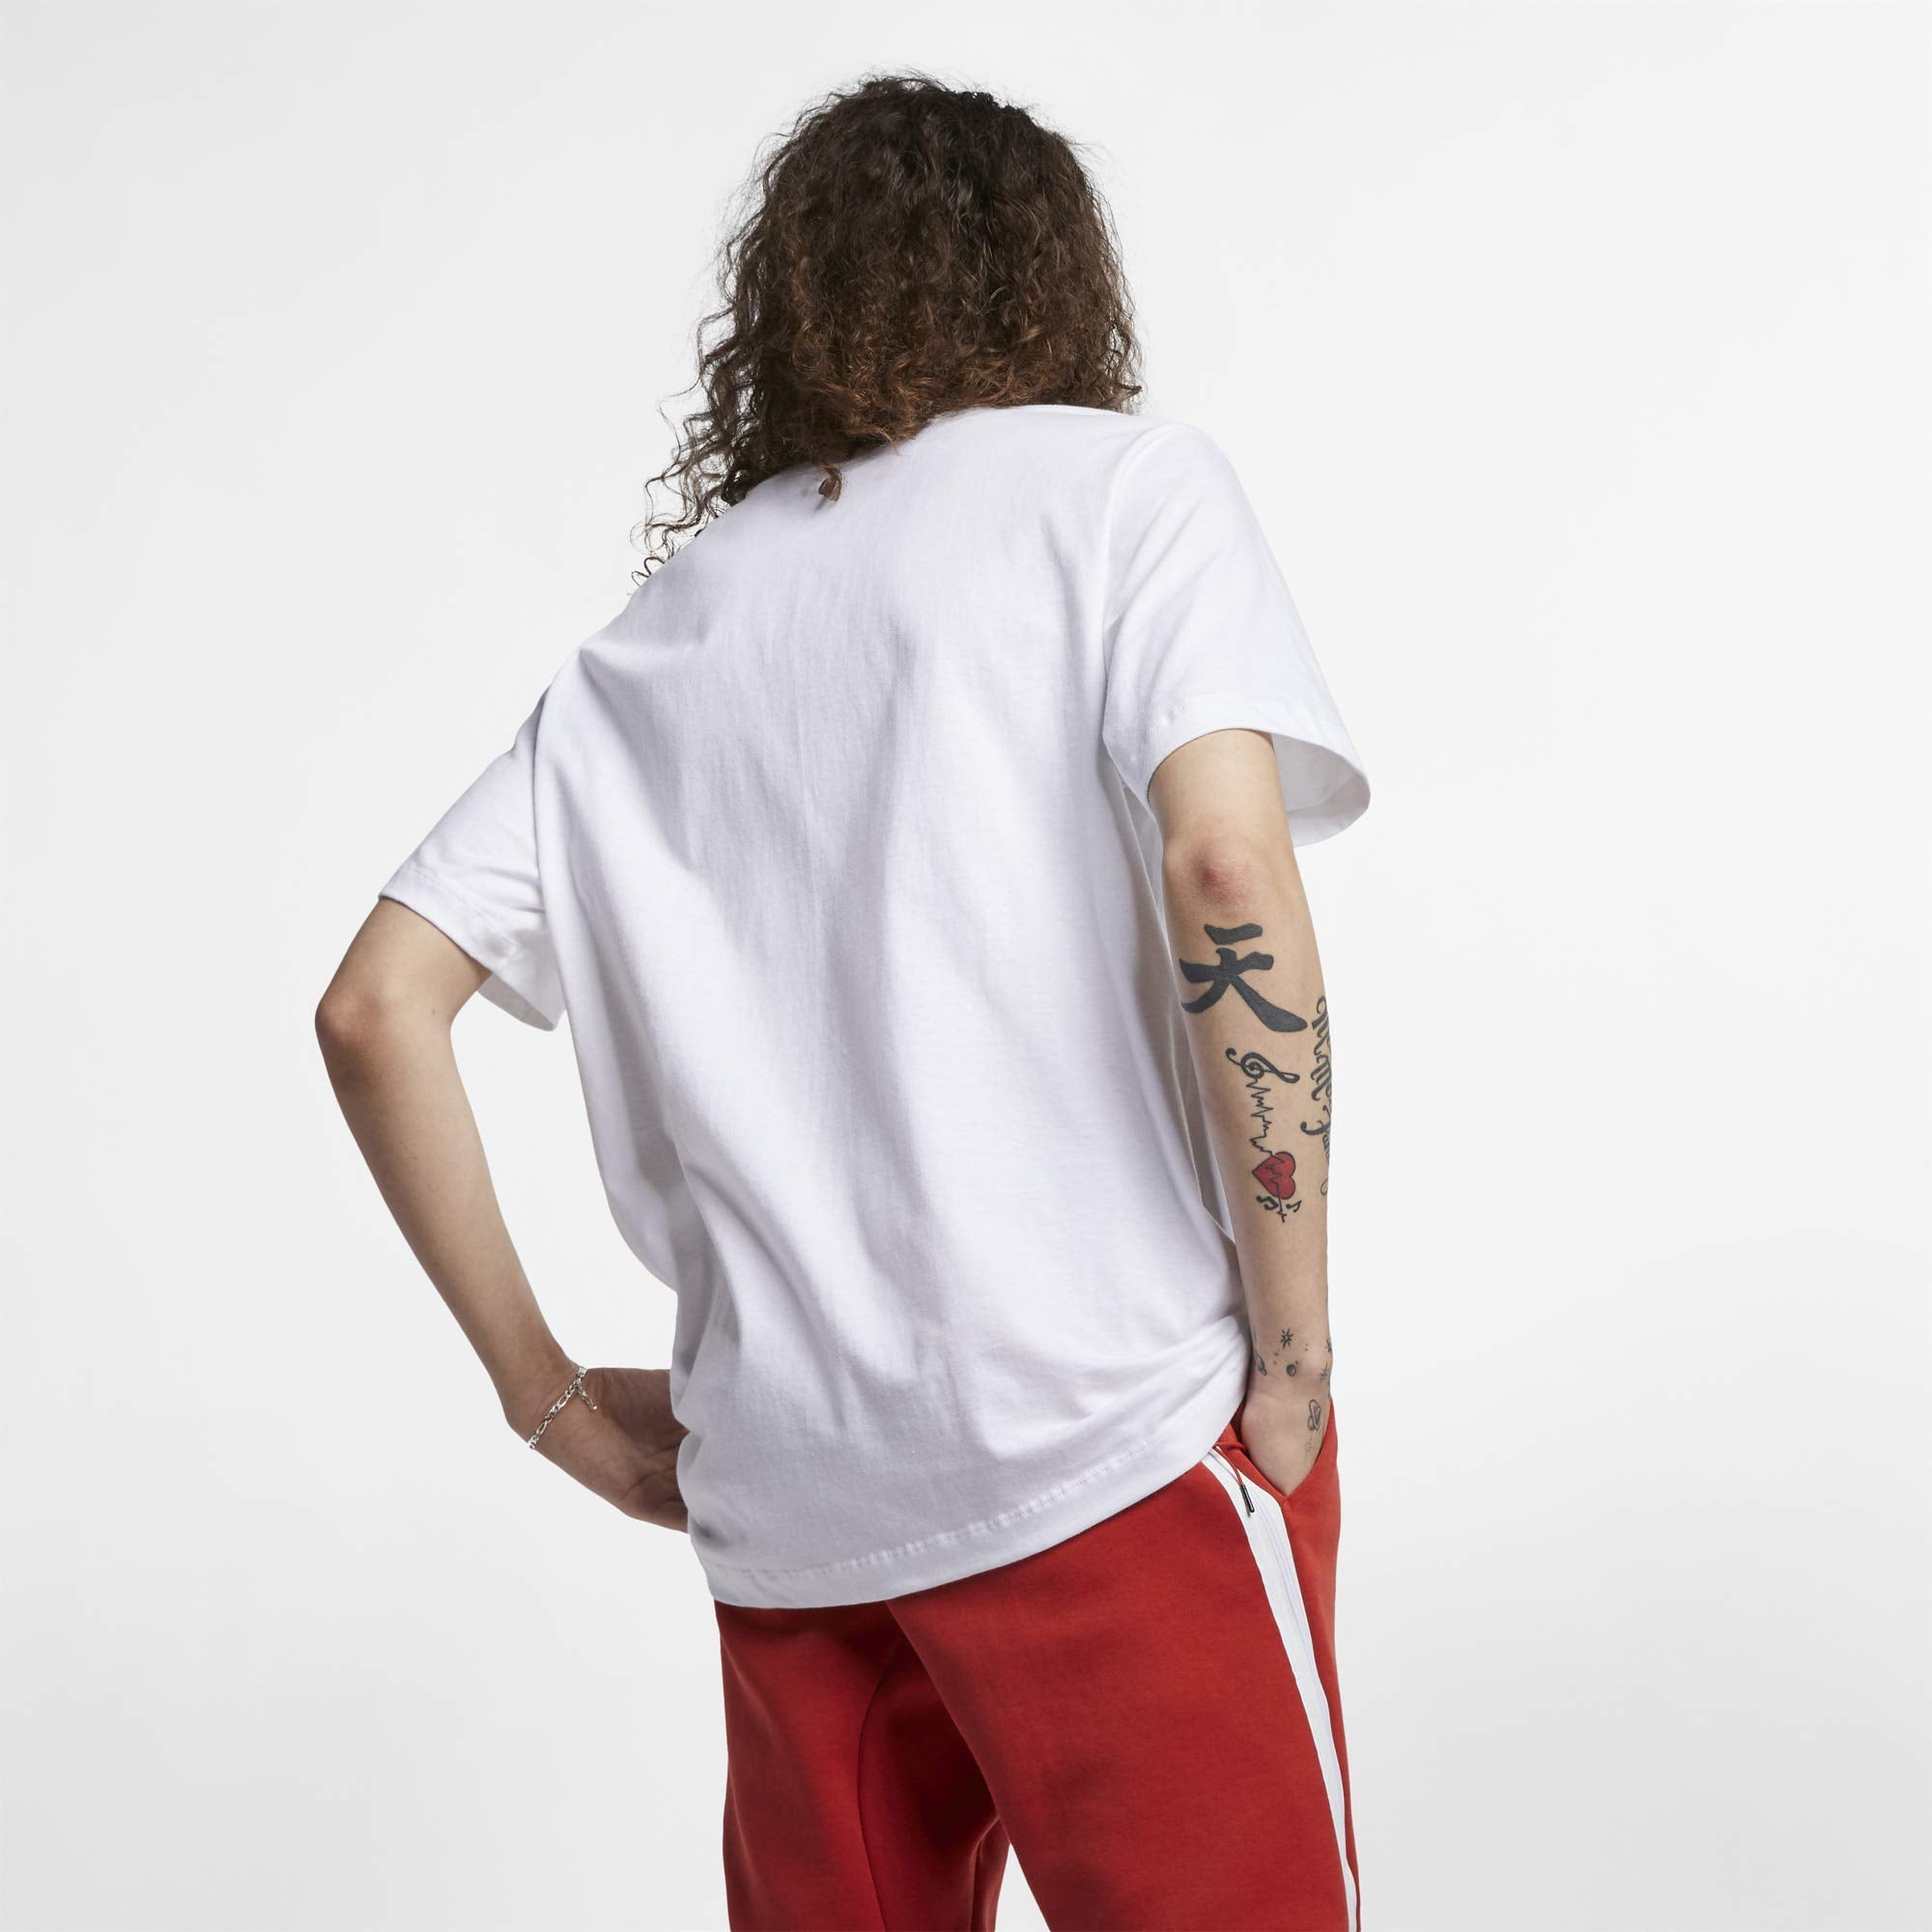 NIKE T-shirt Nsw Club - Homme - Blanc